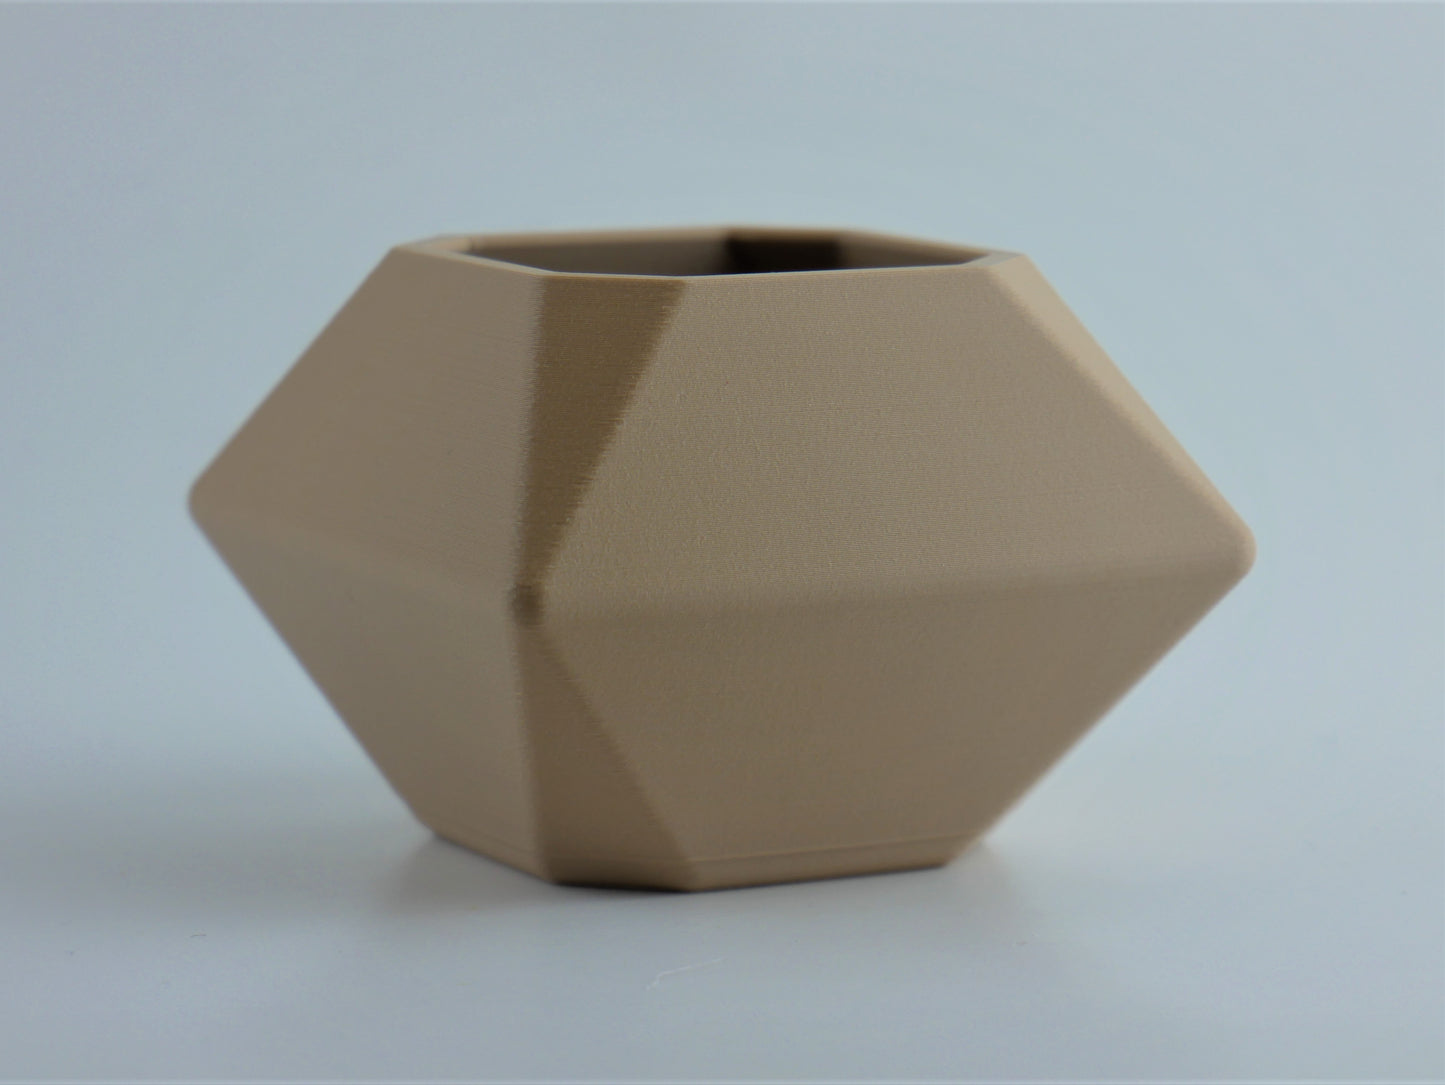 Hexagon Desk Planter - 3D Printed